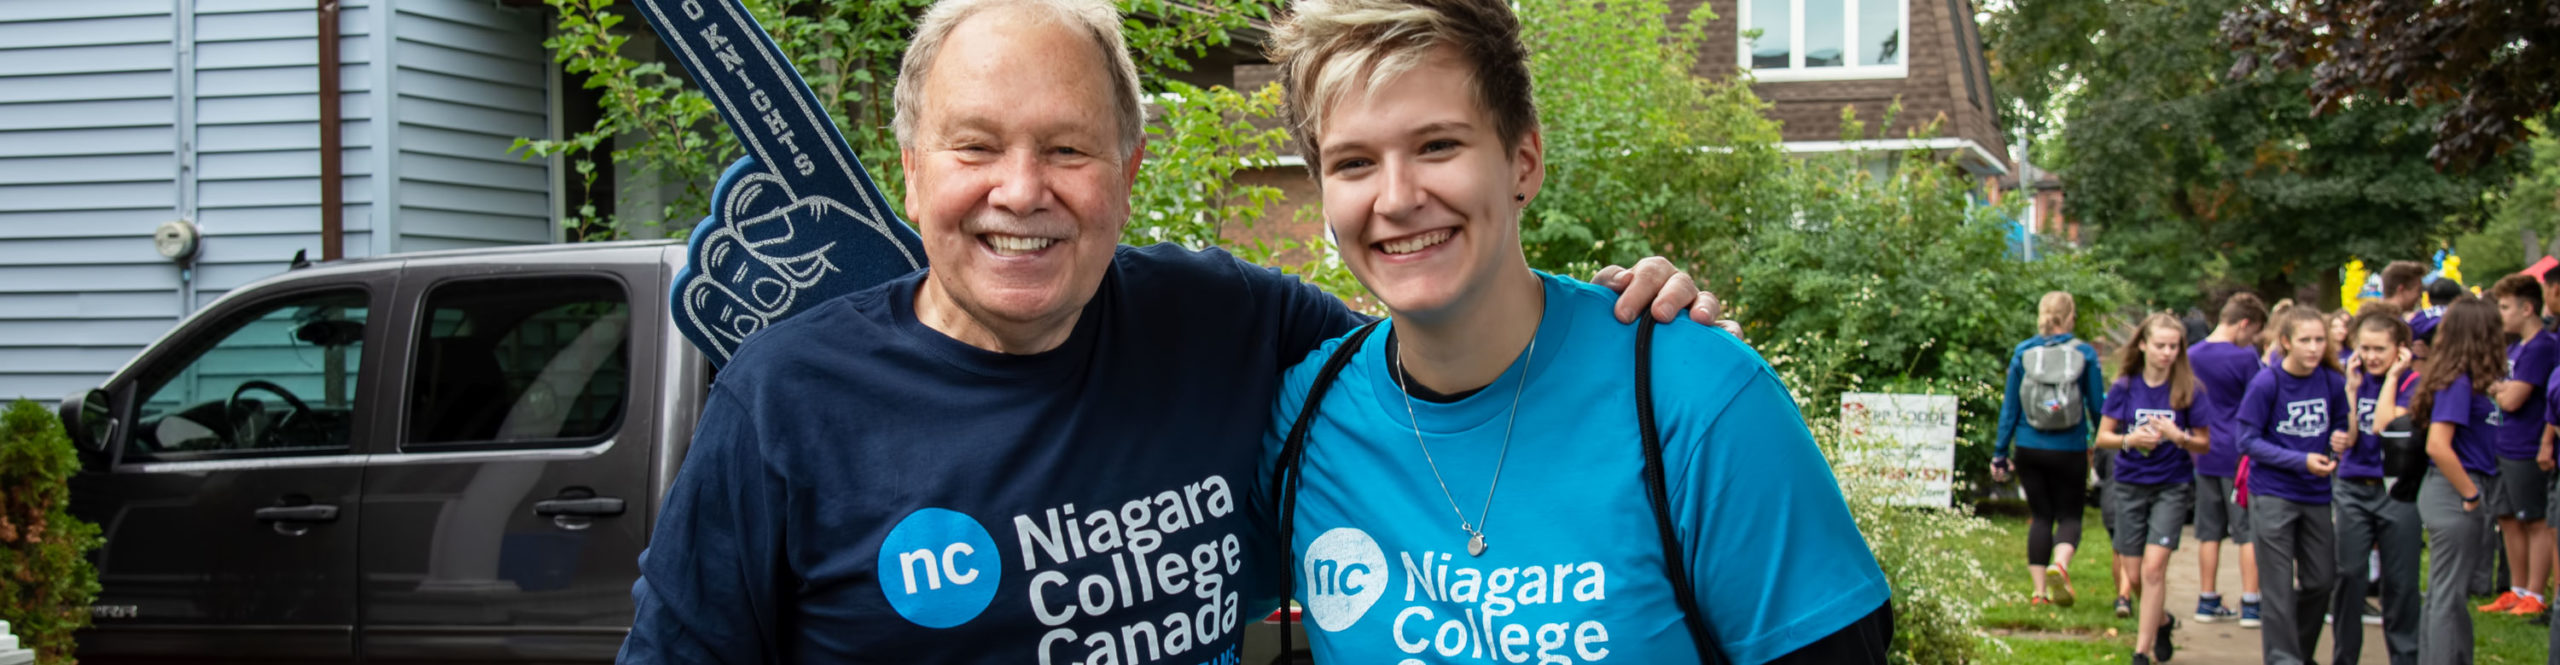 Dan posing with Niagara College student